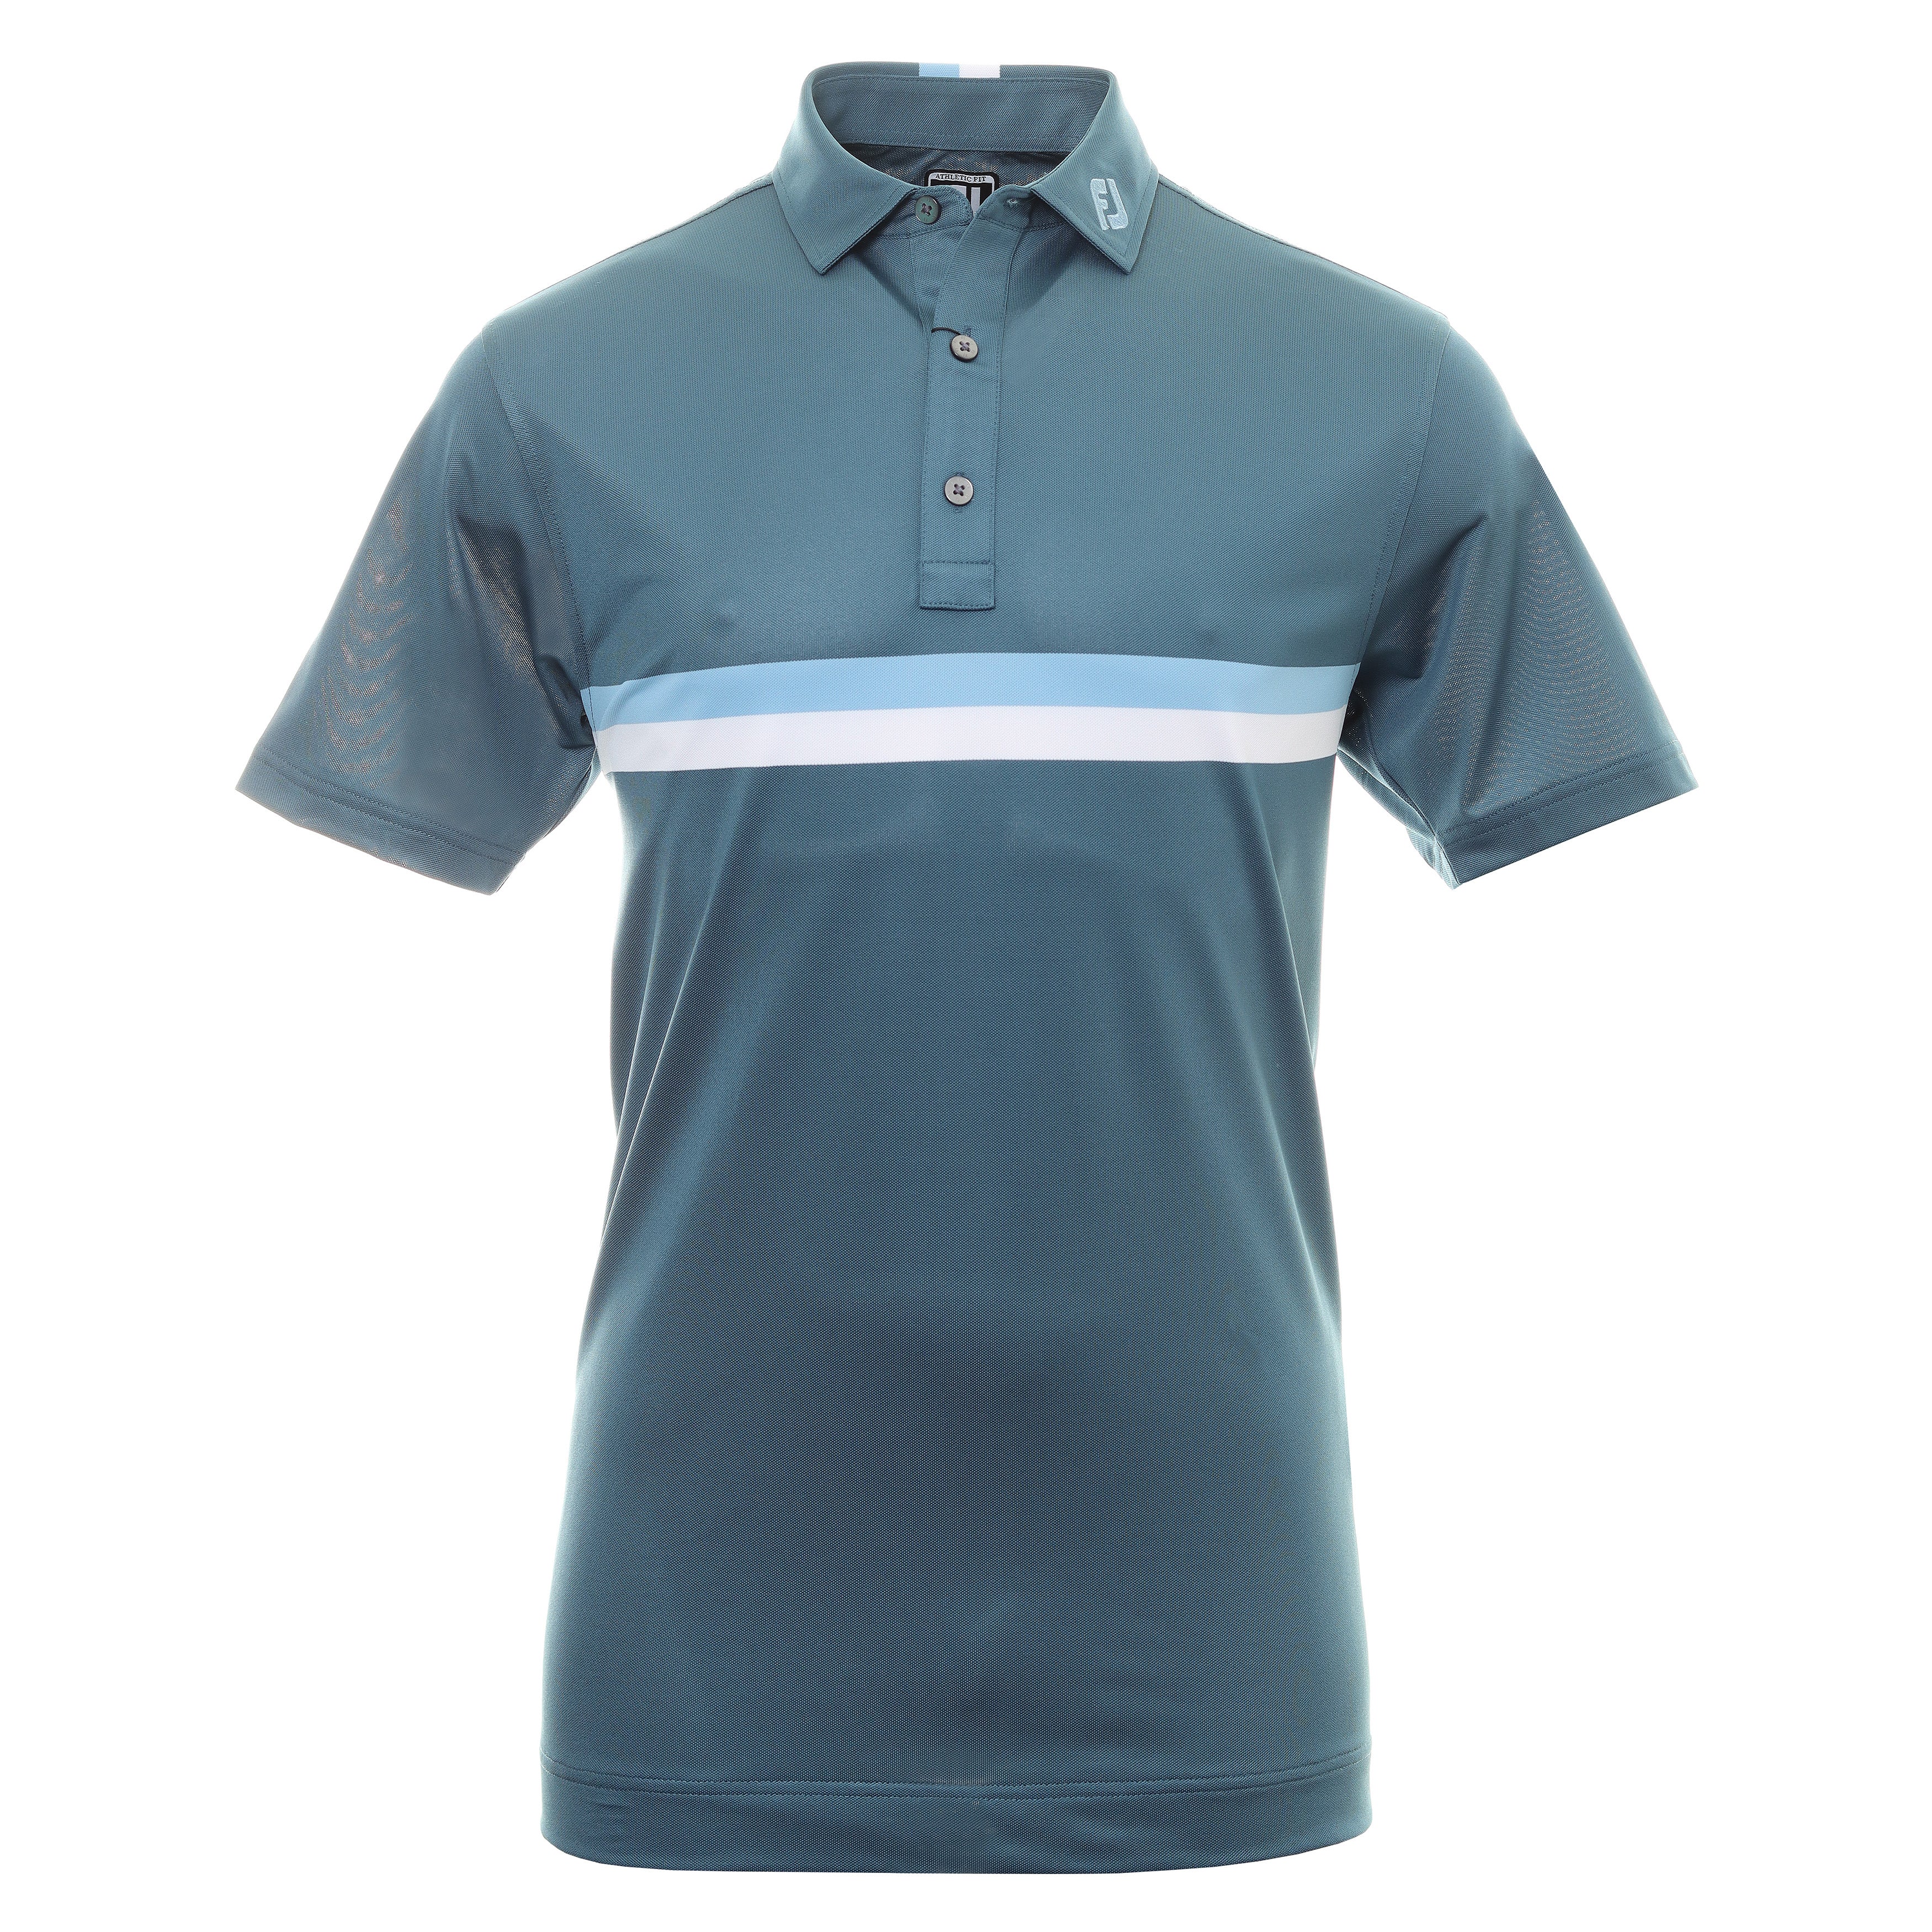 FootJoy Double Chest Band Pique Golf Shirt 88391 Ink Dusk Blue White ...